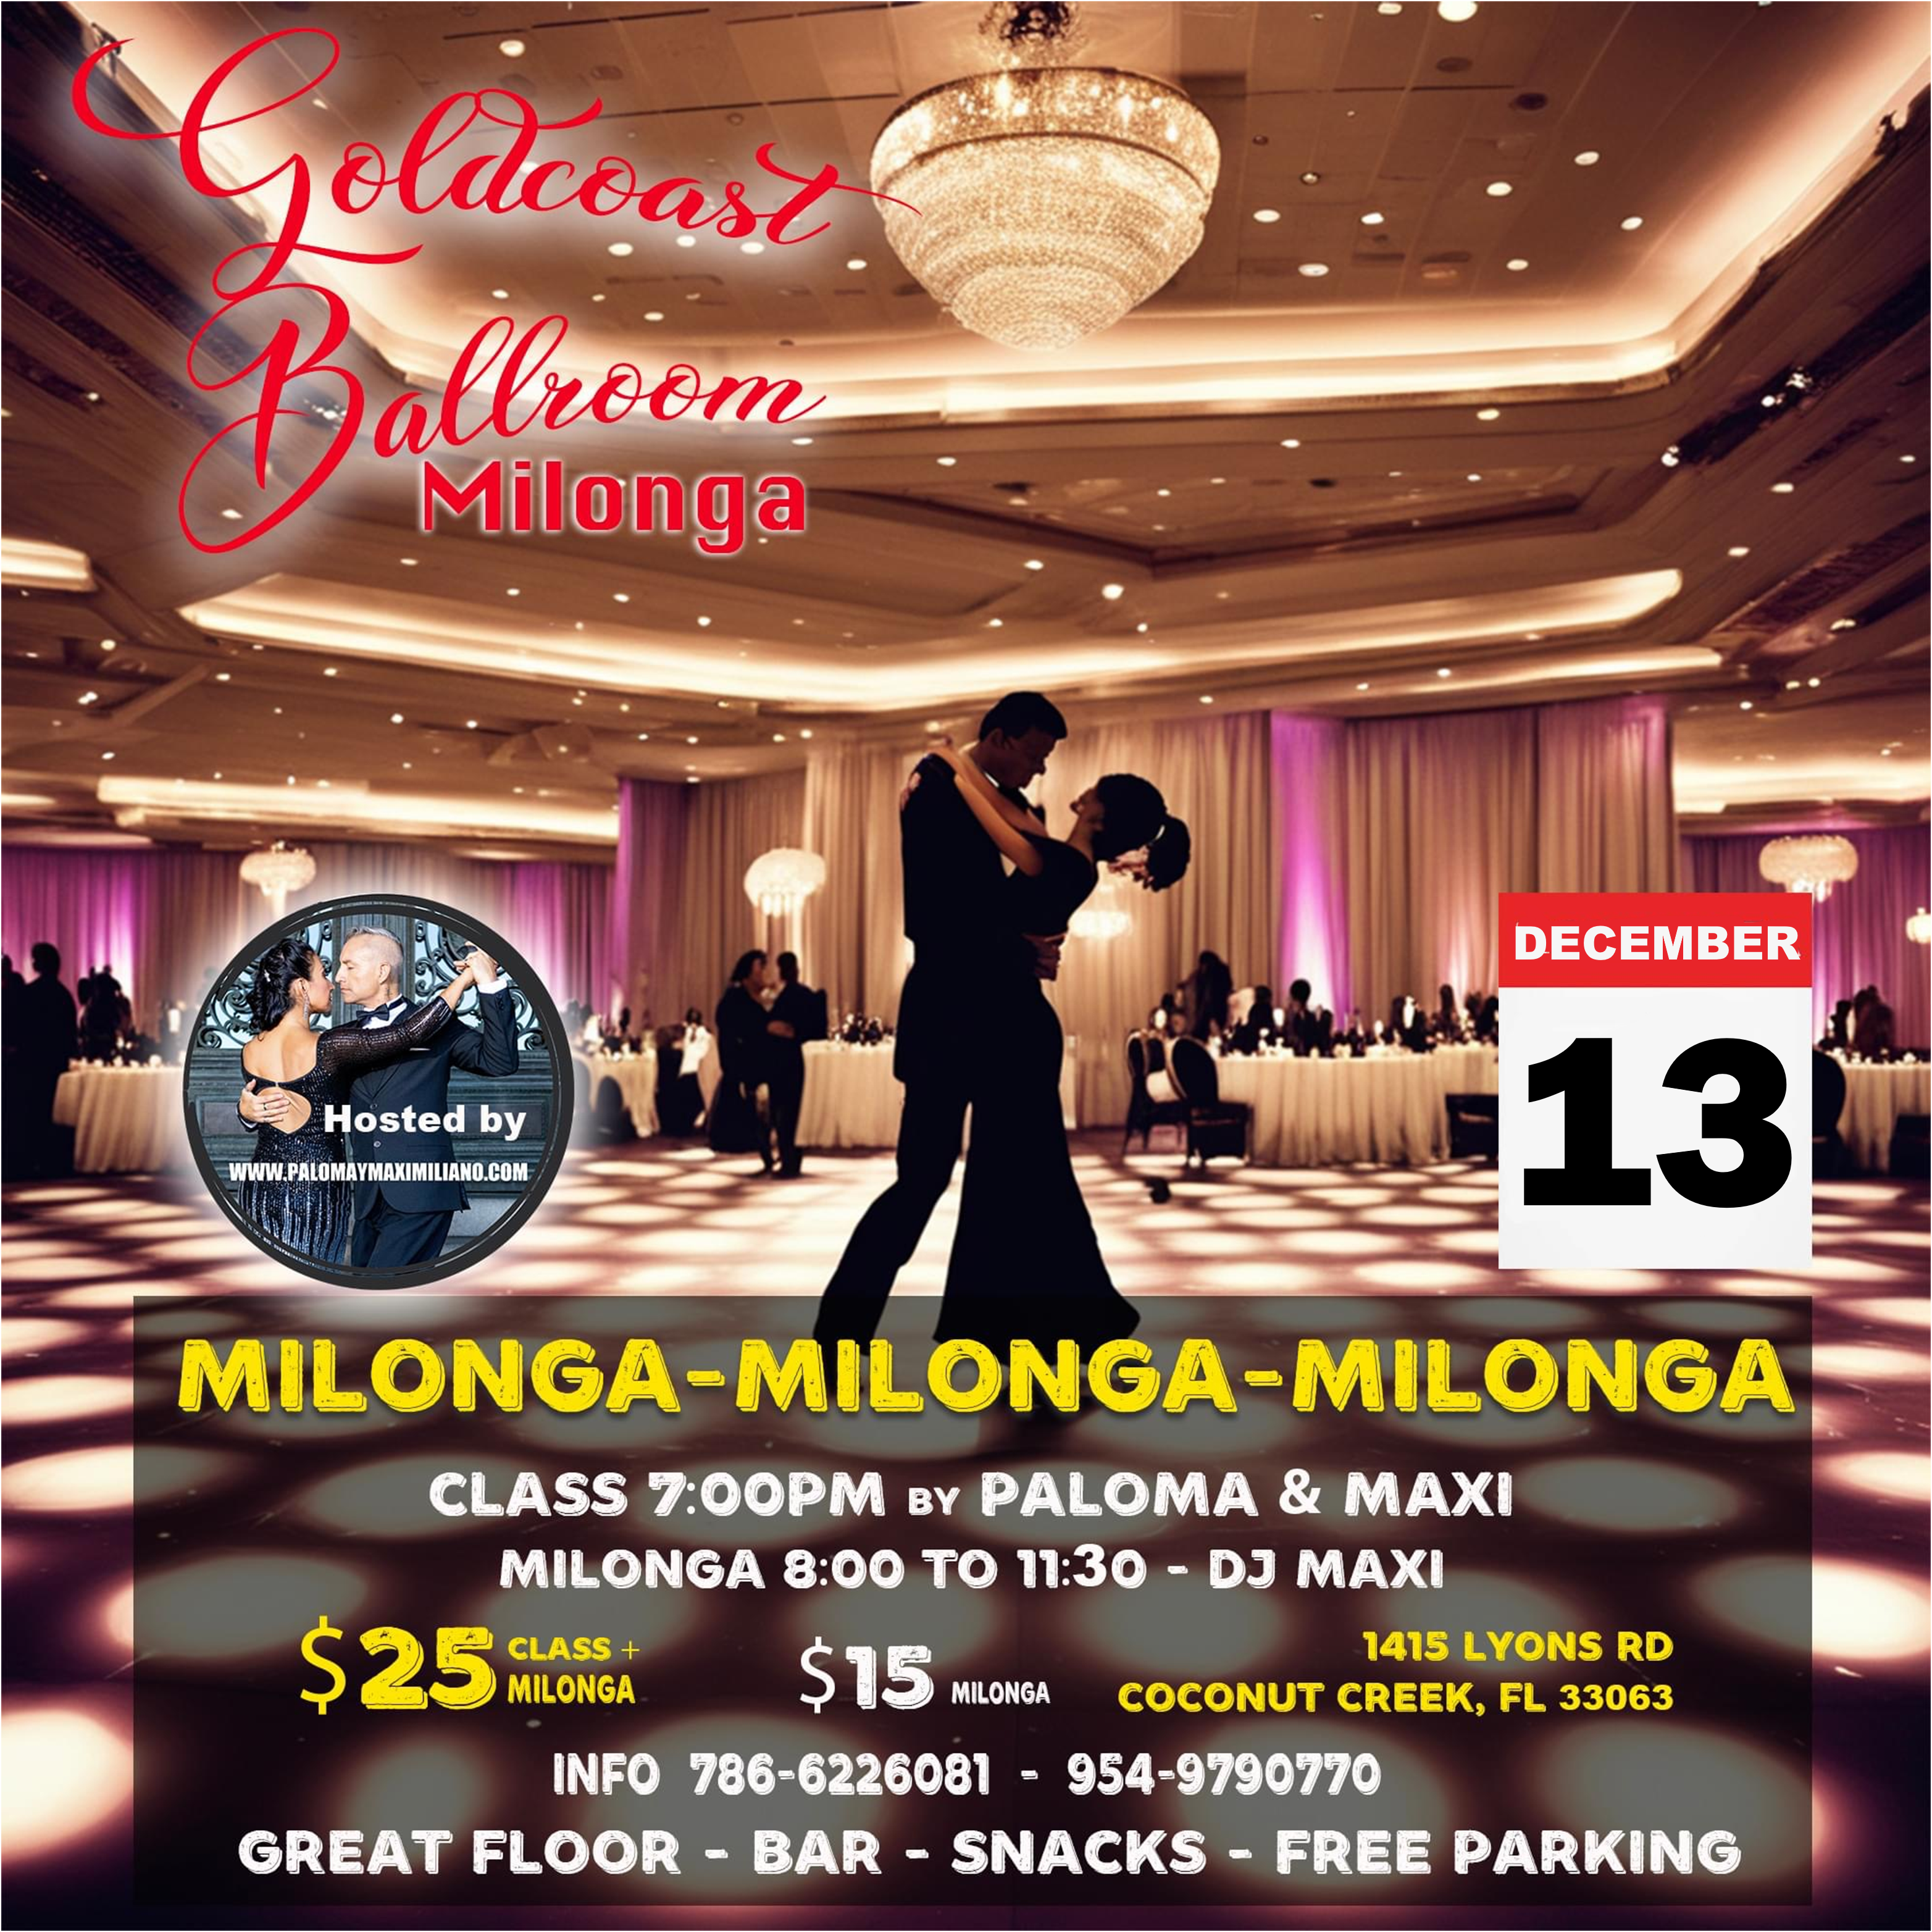 Wednesday, December 13 - Grand Milonga & Class!